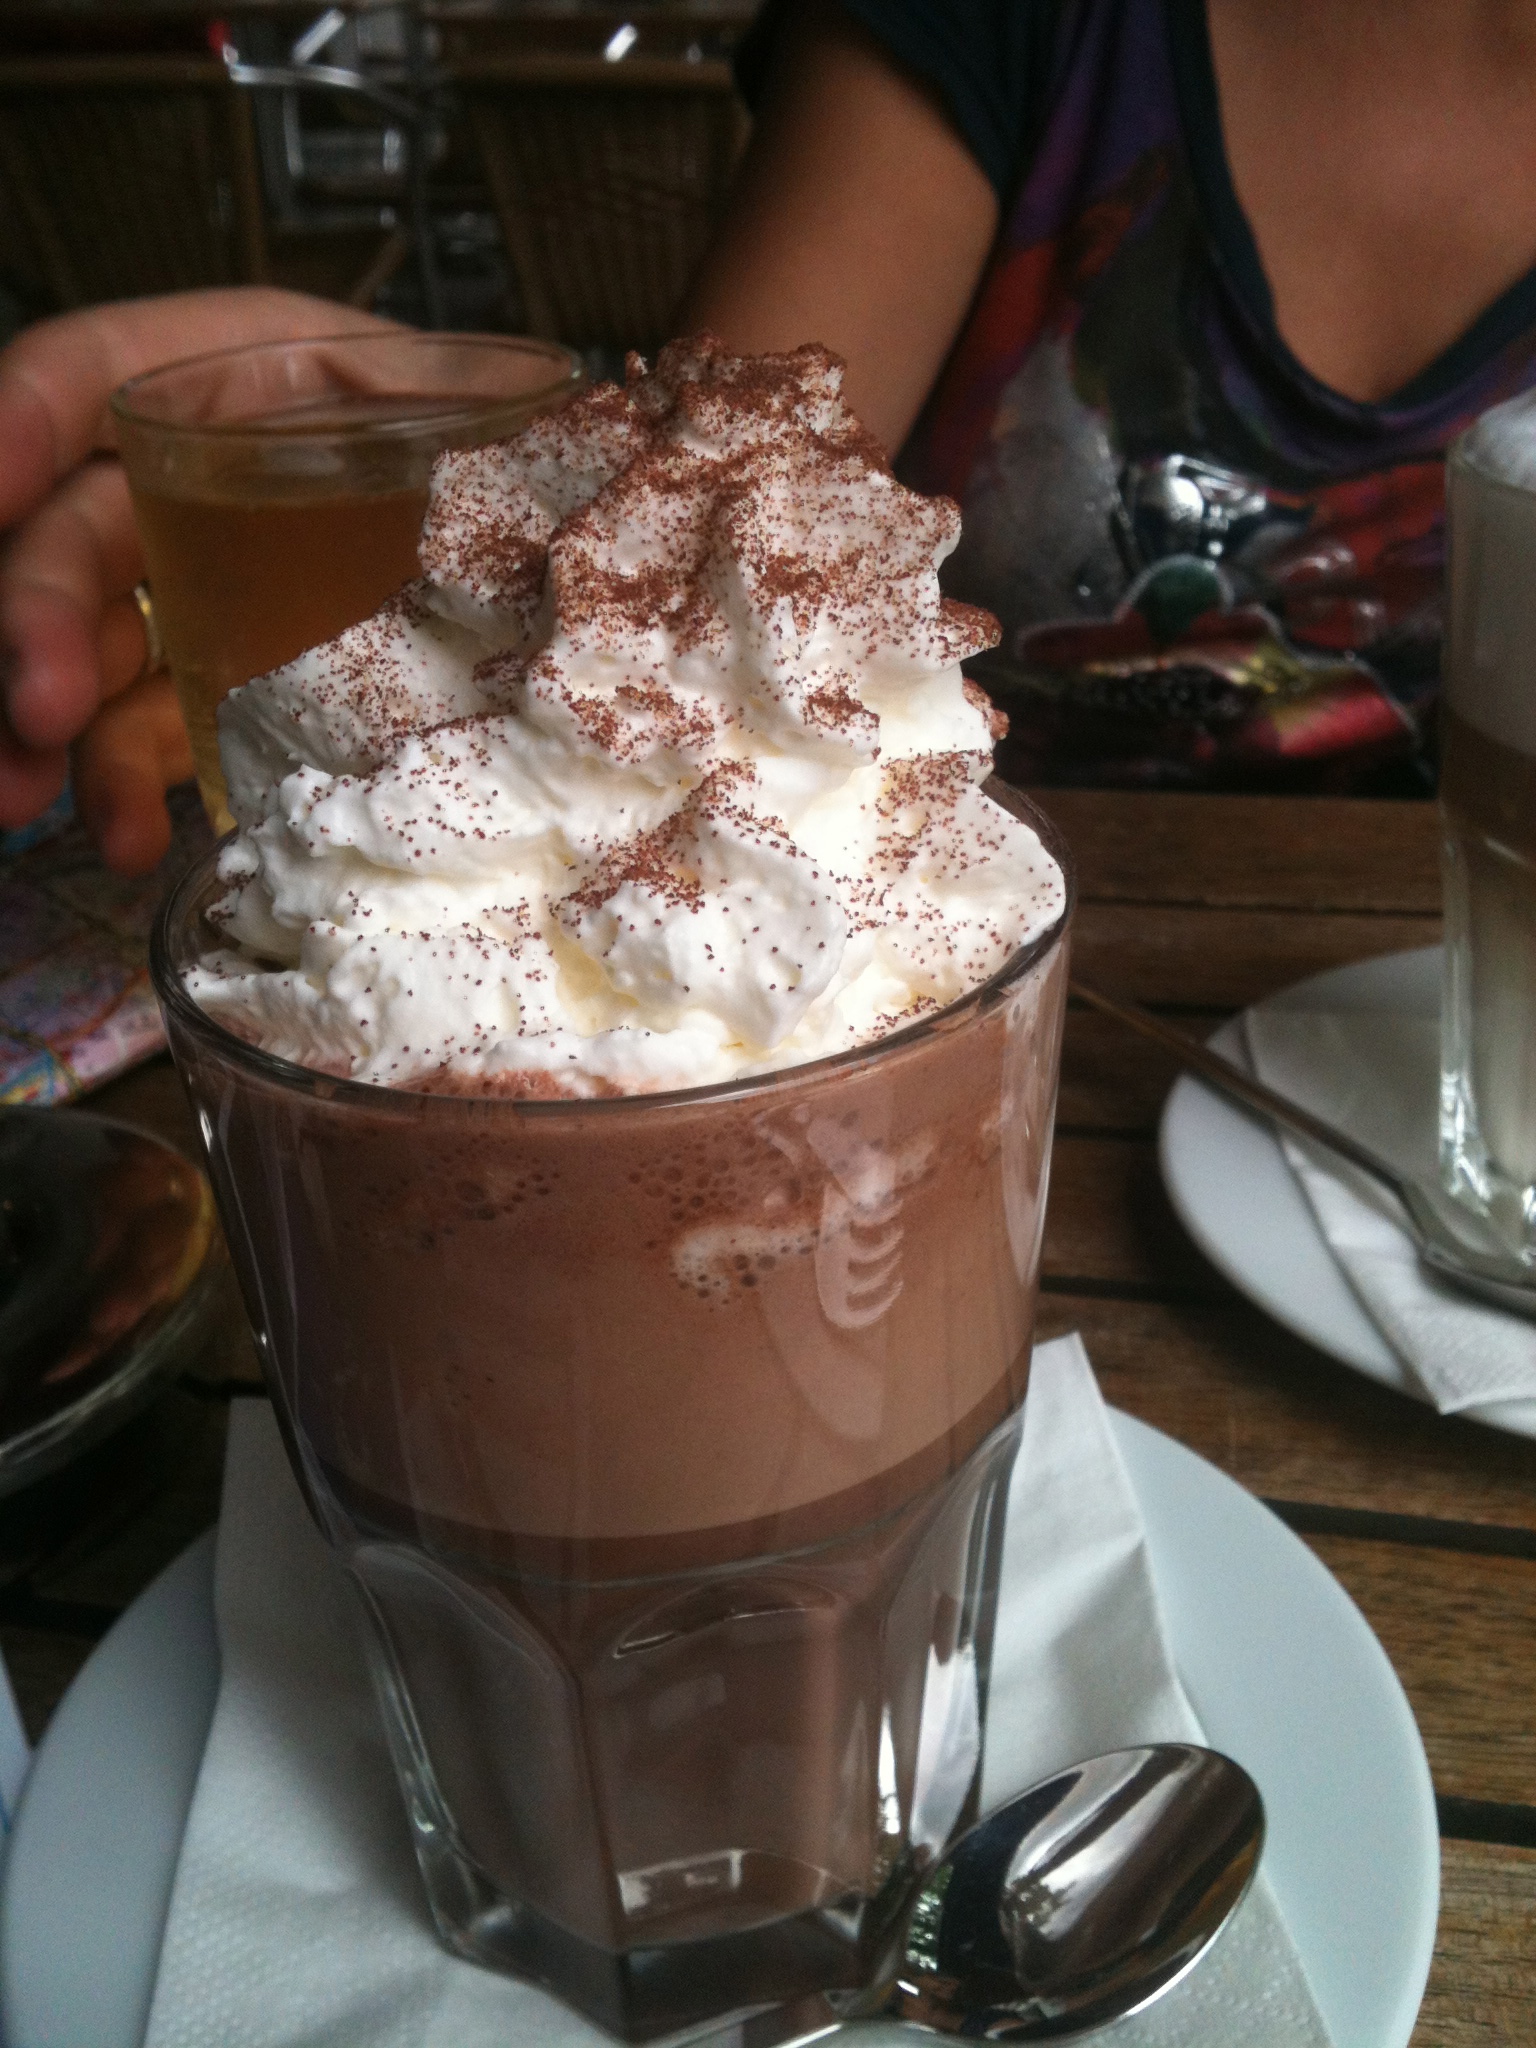 a glass of chocolate milkshake with whipped cream